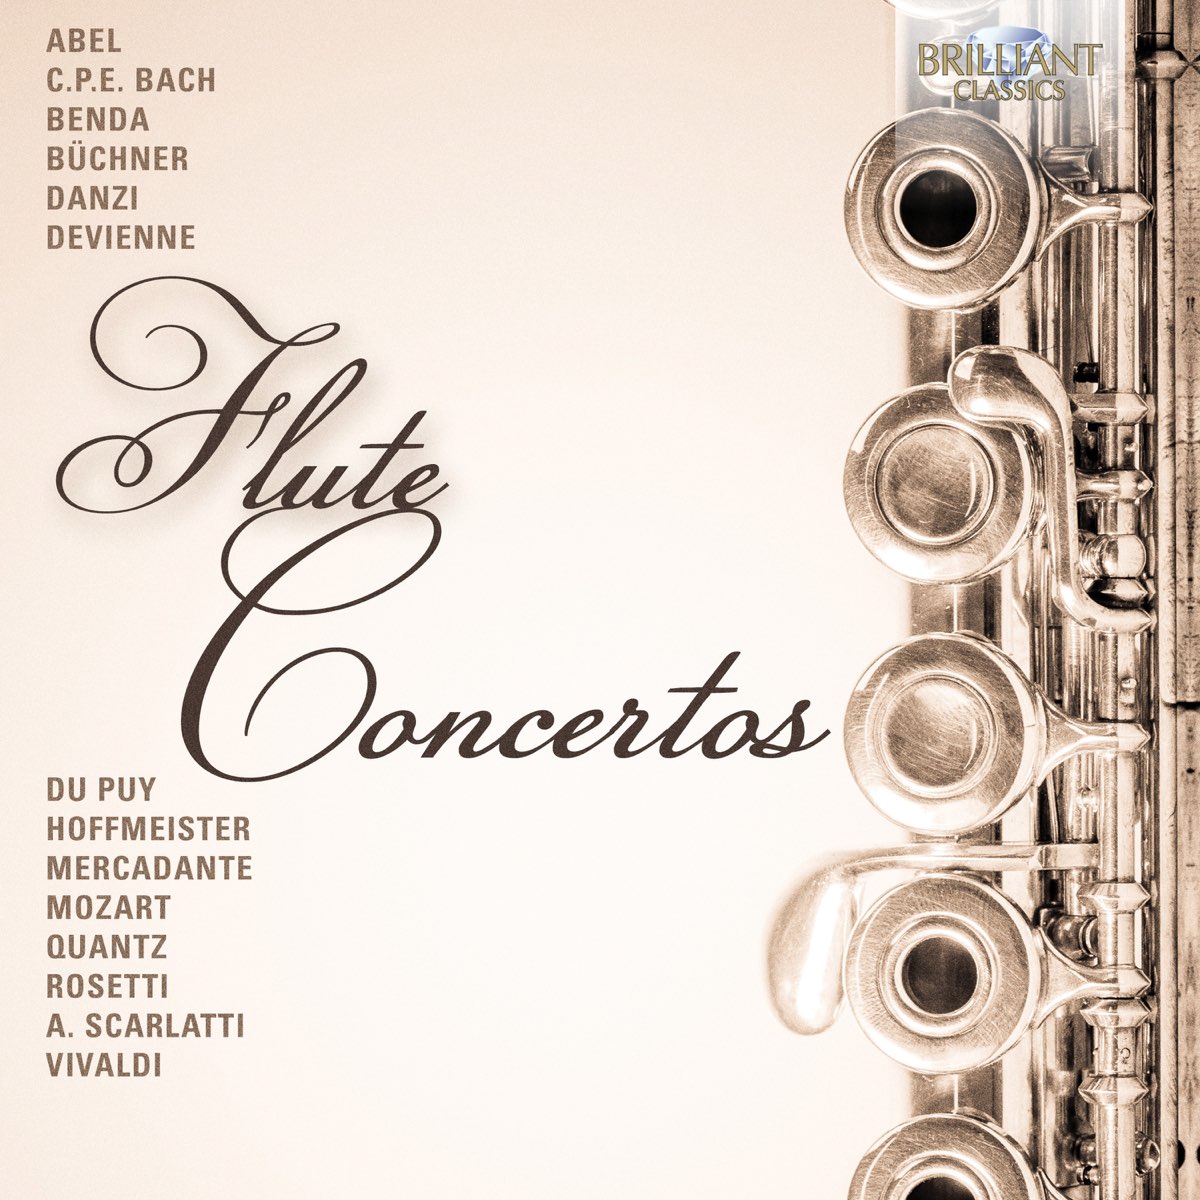 Flute Concerto.. Quantz - Flute Concertos, QV 5 - Johannes Walter. Flute concertos